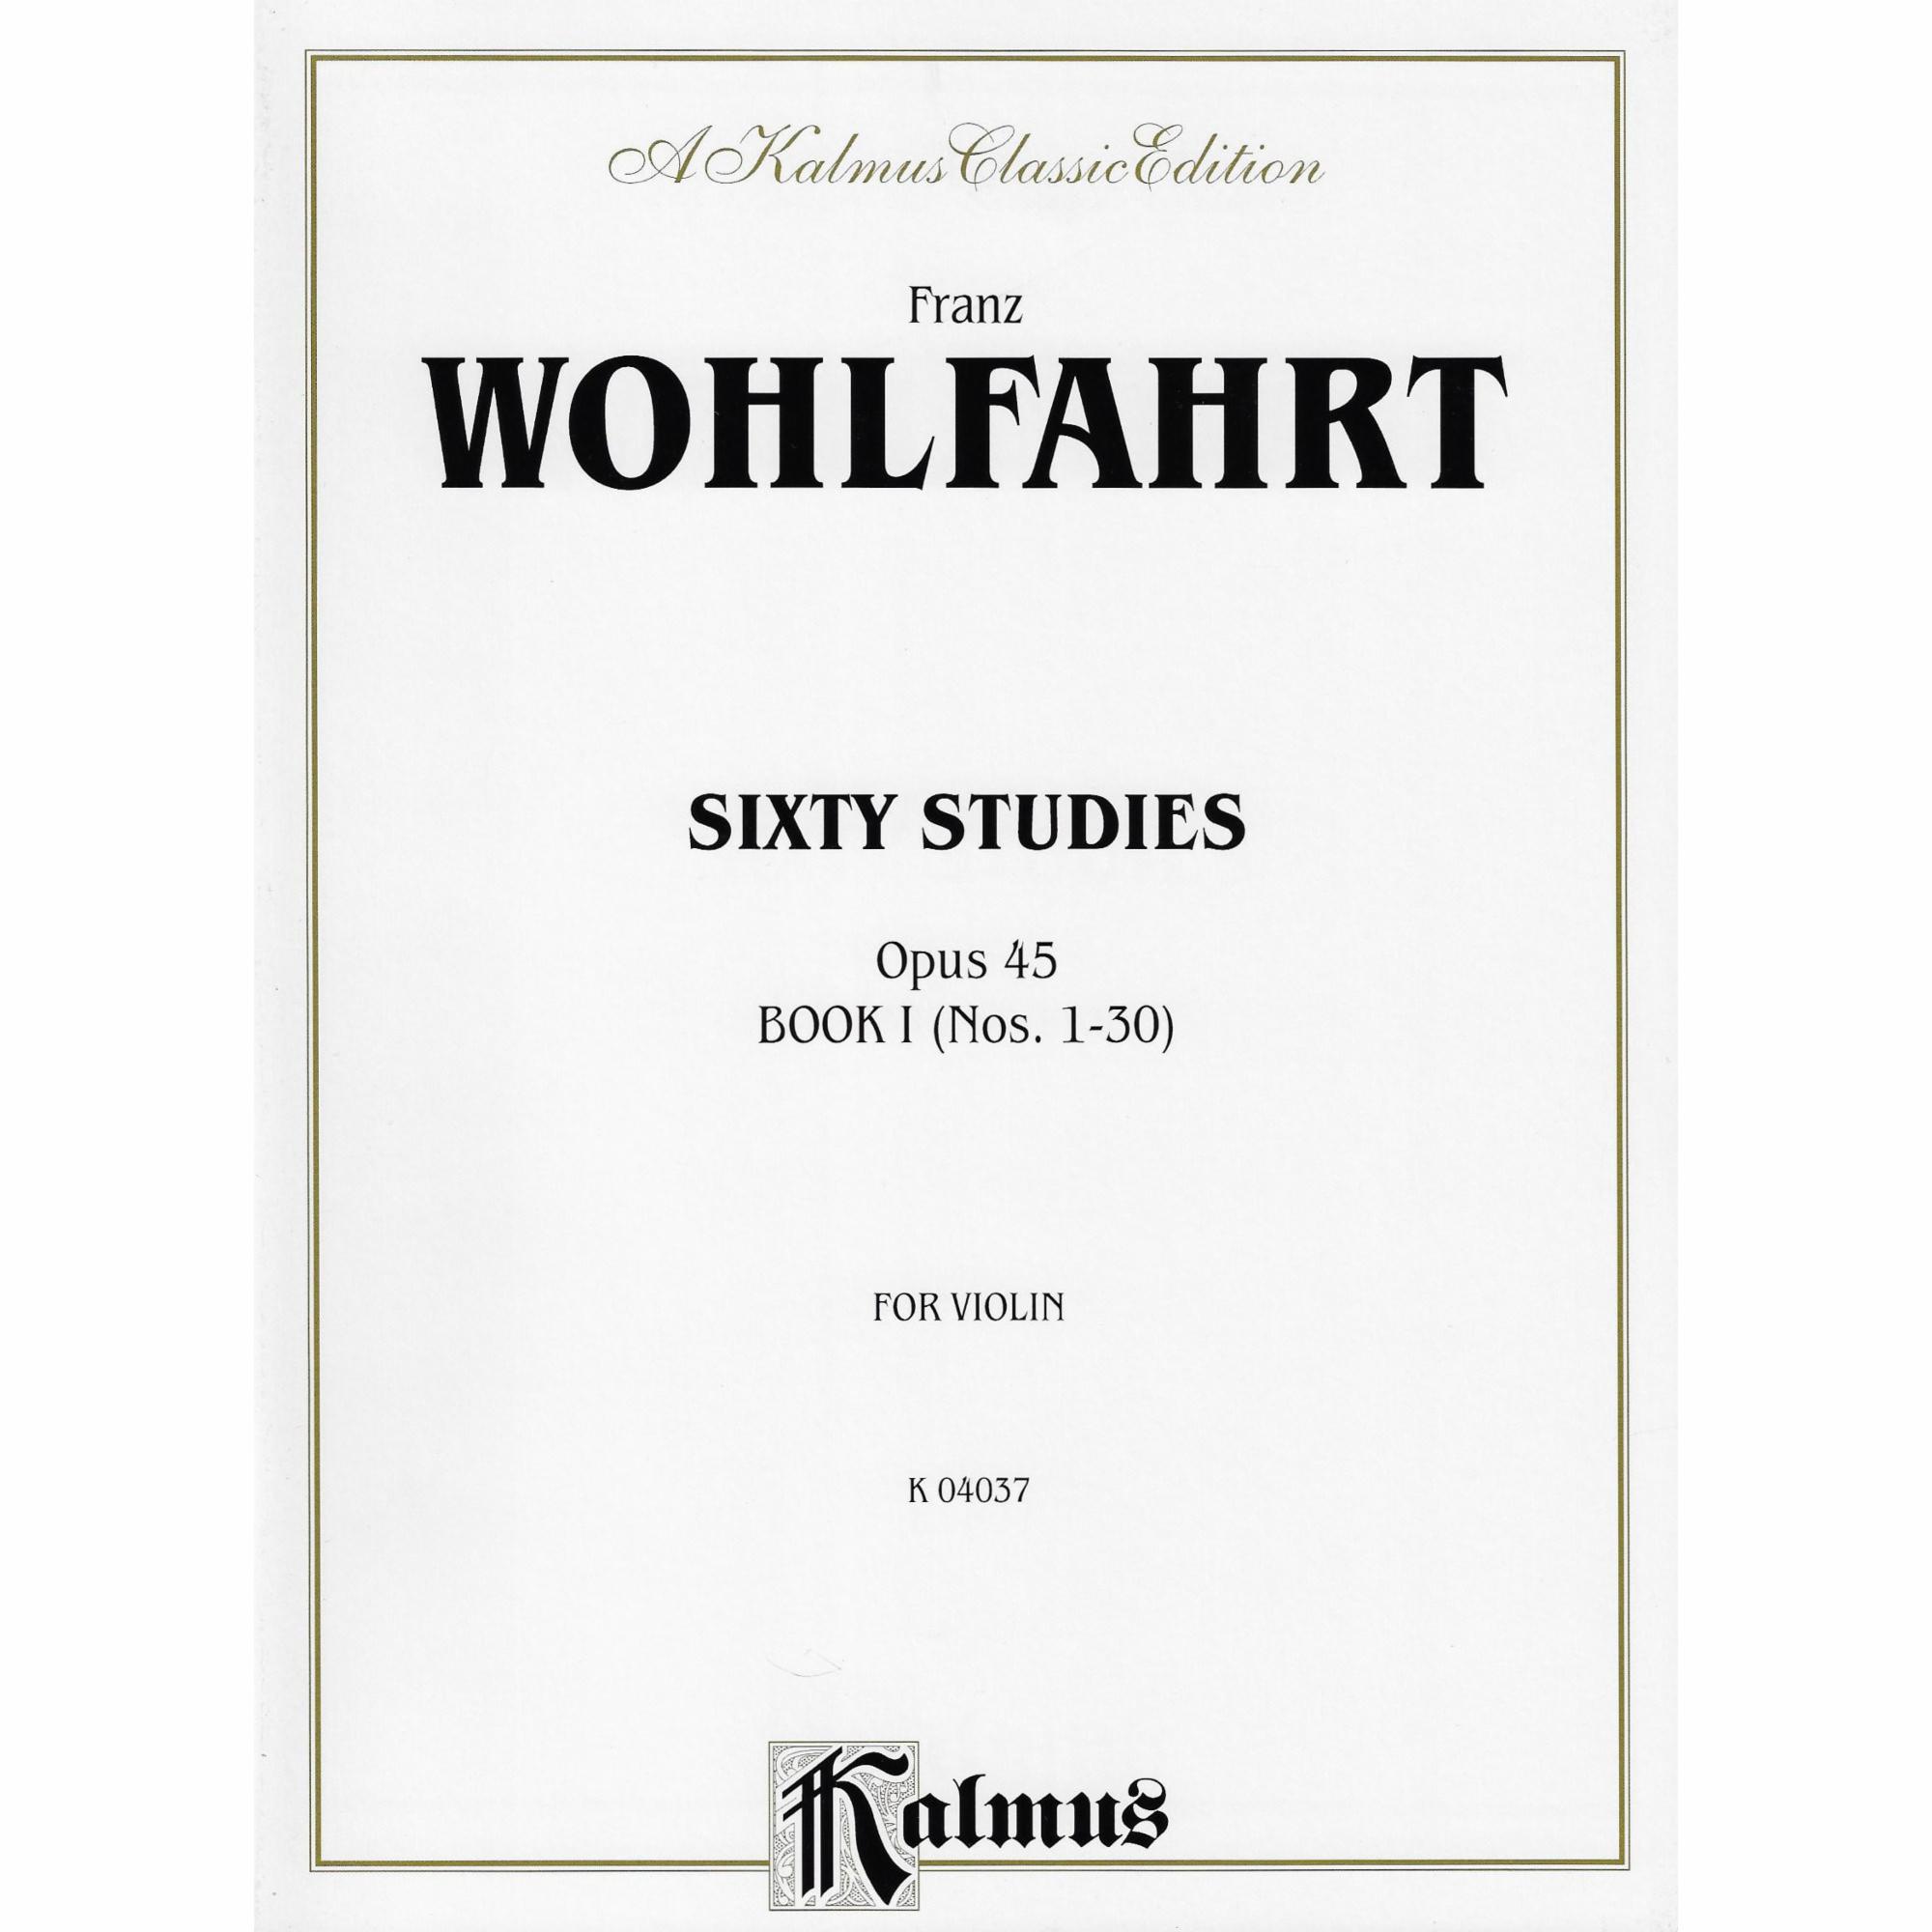 Wohlfahrt -- Sixty Studies, Op. 45, Books 1-2 for Violin